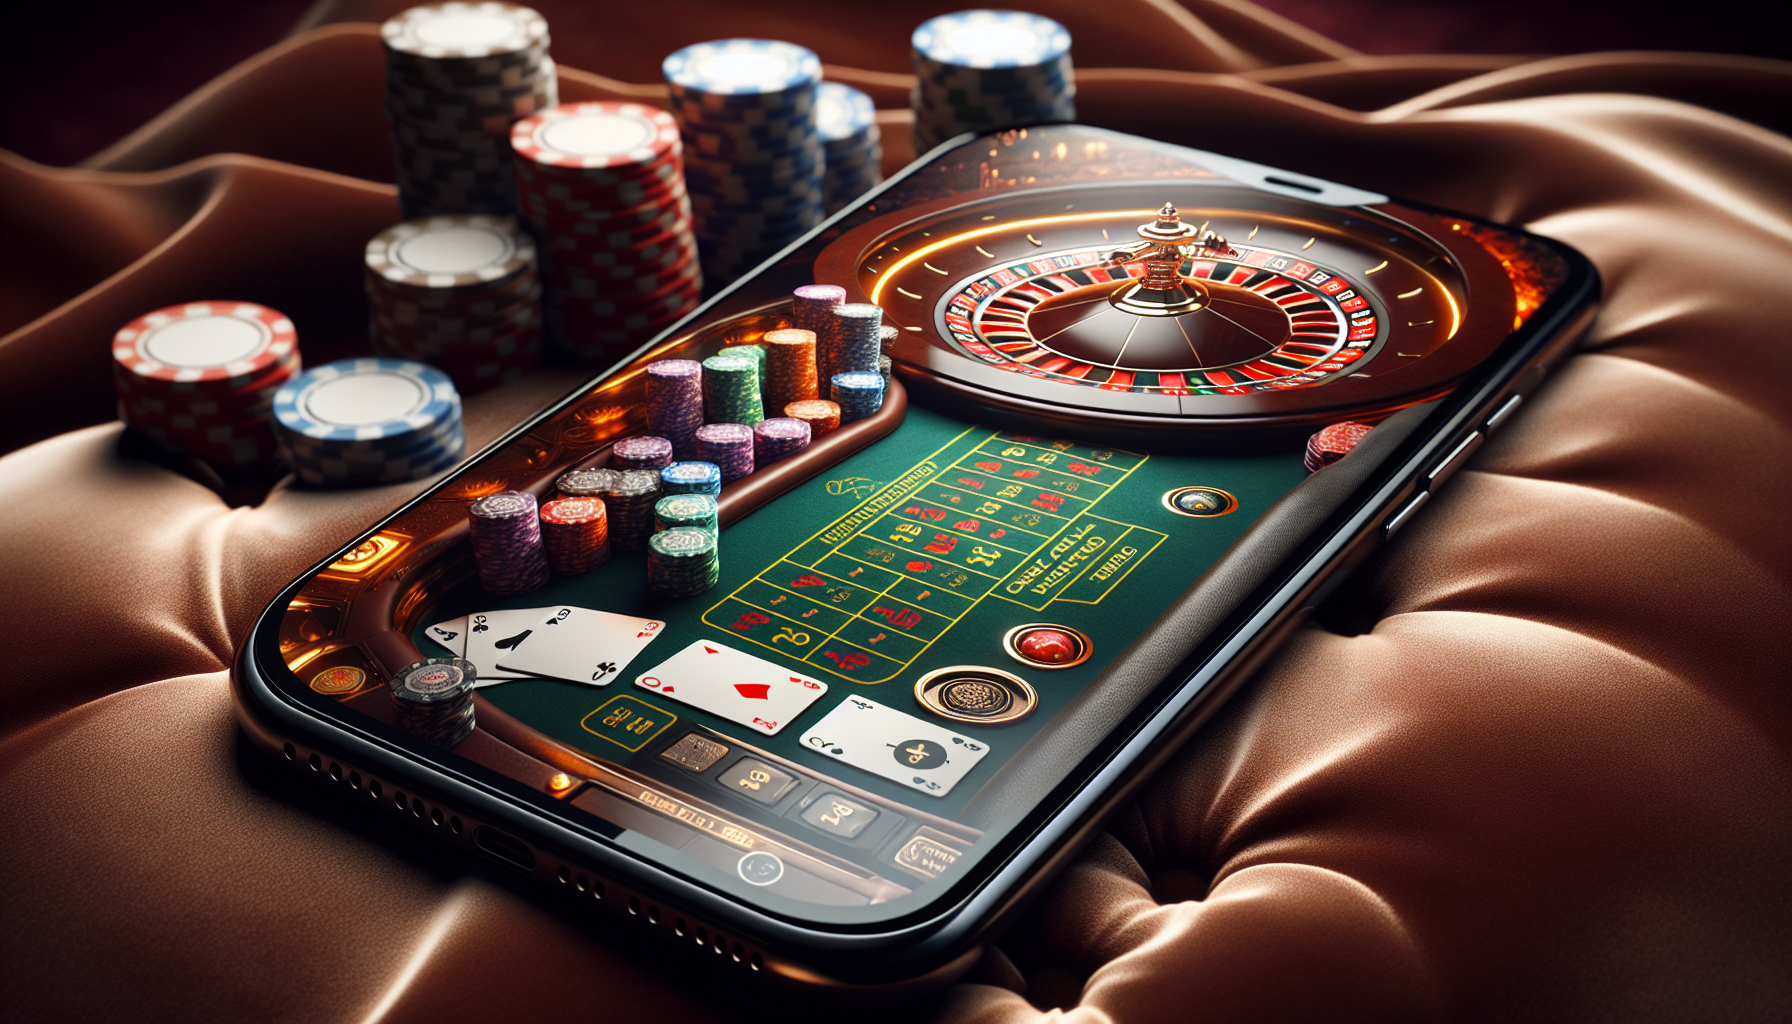 Elegant mobile blackjack and roulette table